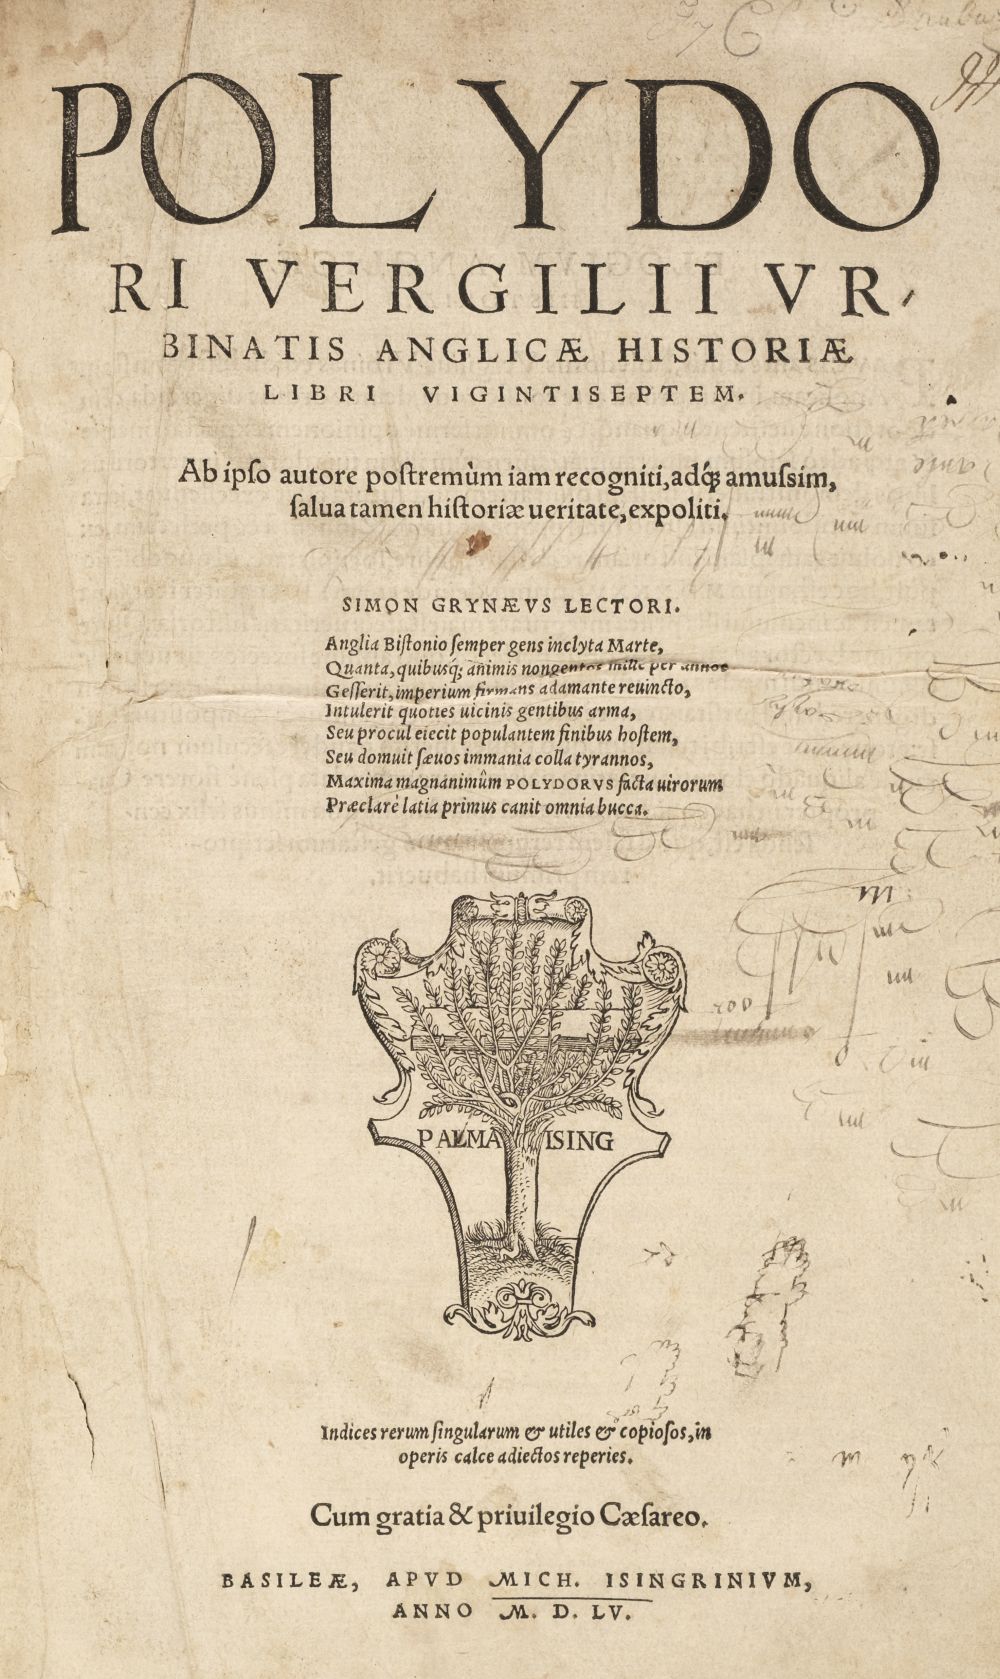 Vergil (Polydore). Polydori Vergilii Urbinatis Anglicae Historiae libri vigintiseptem, 1555